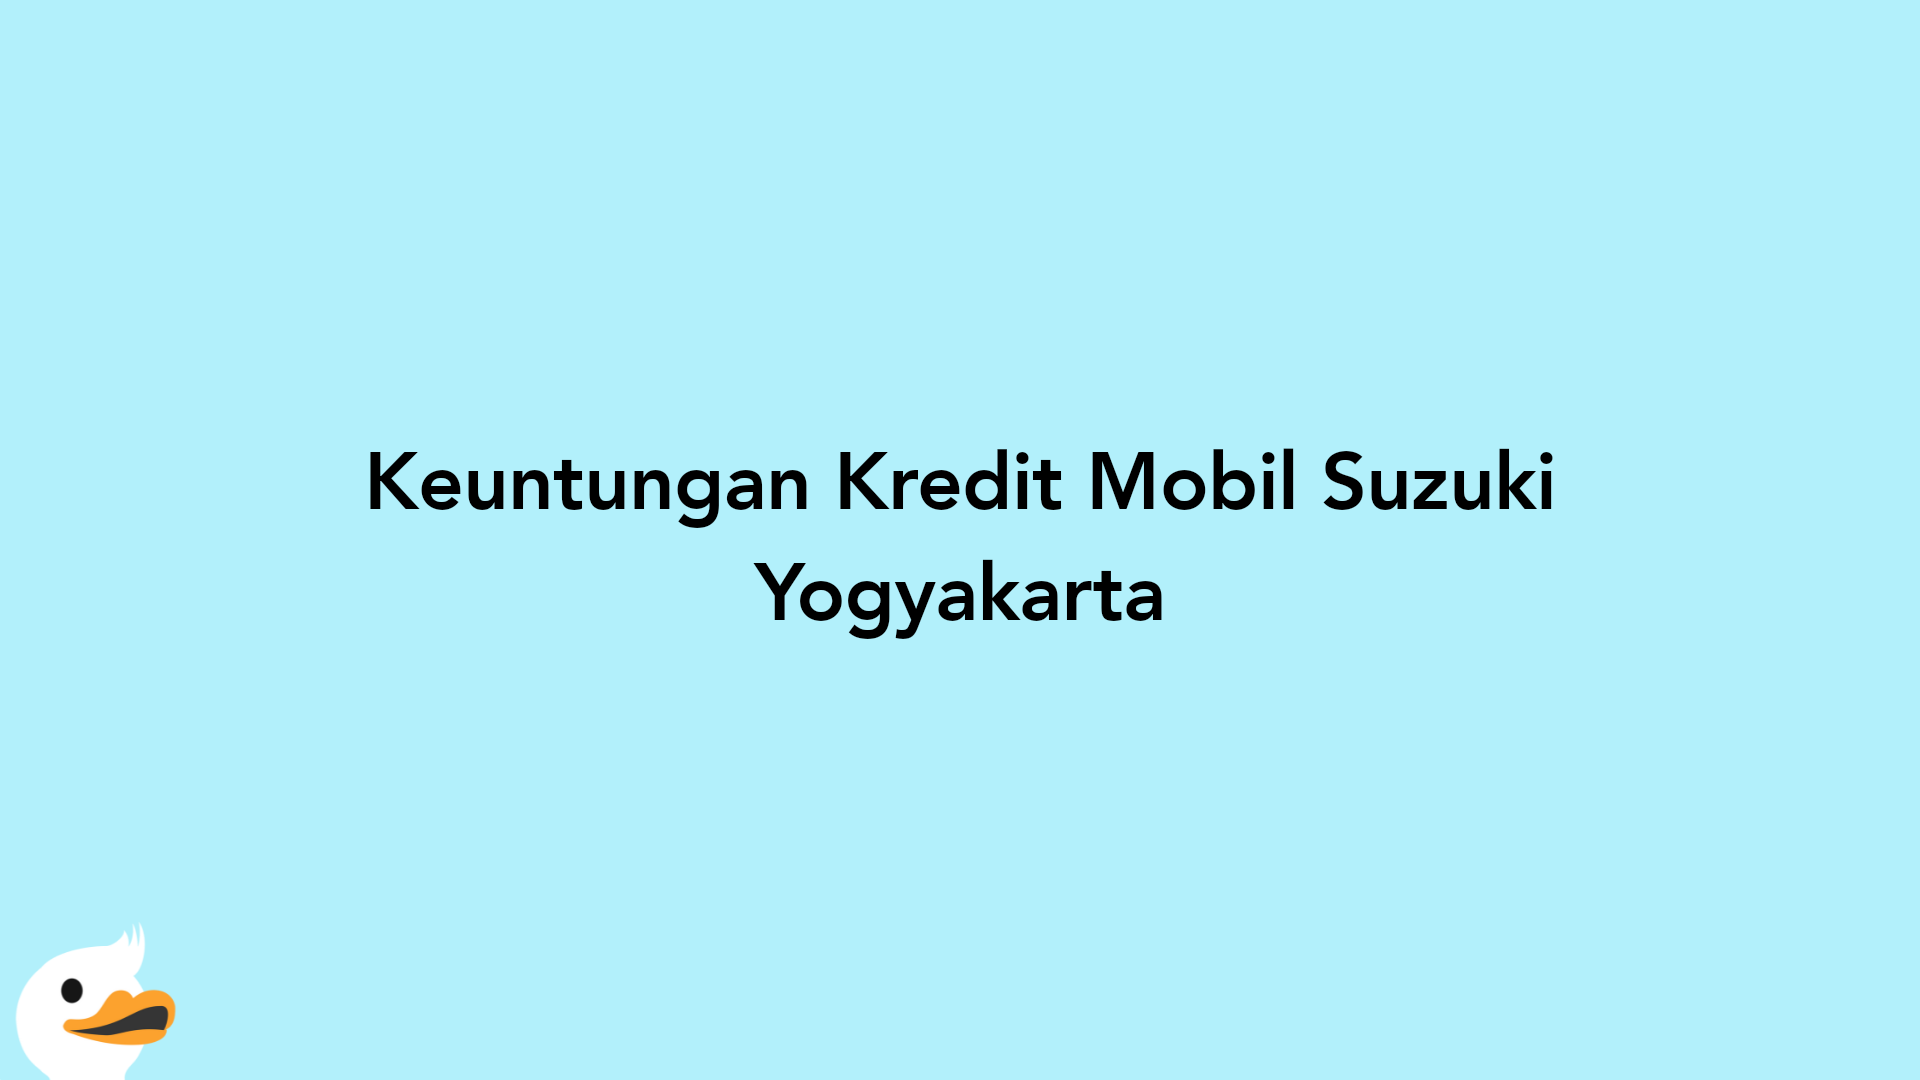 Keuntungan Kredit Mobil Suzuki Yogyakarta